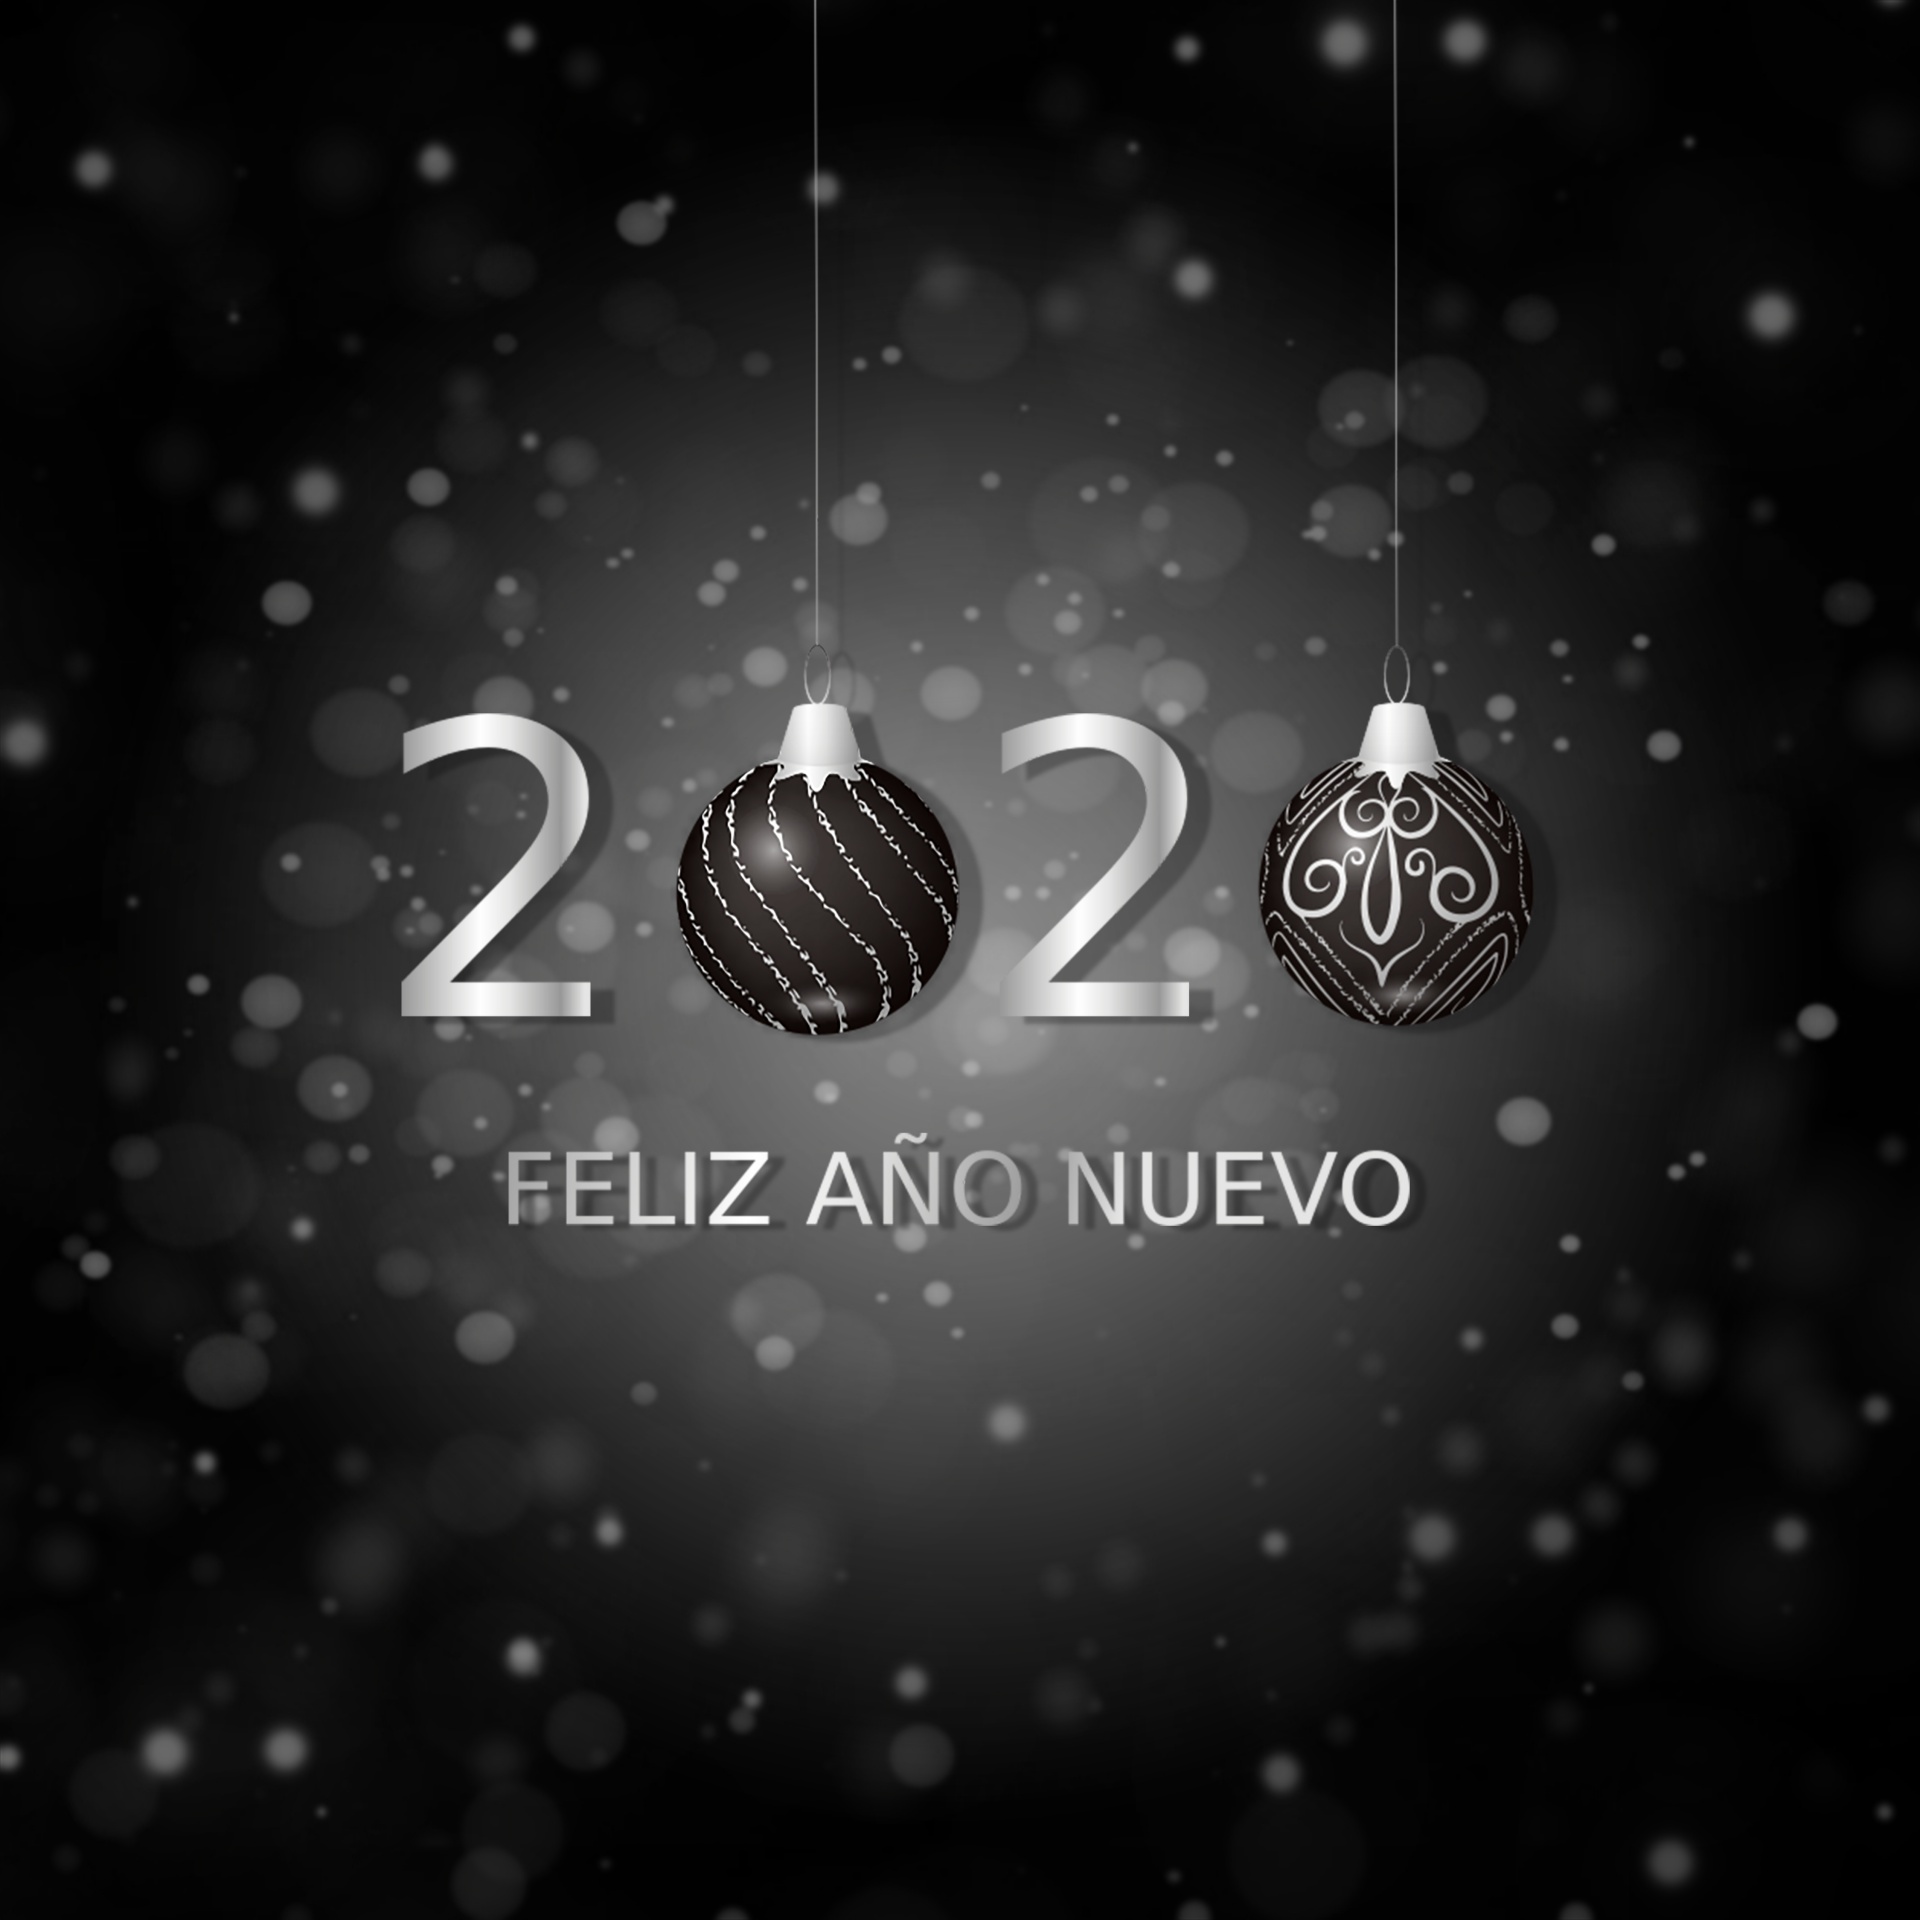 2020 Happy New Year Background